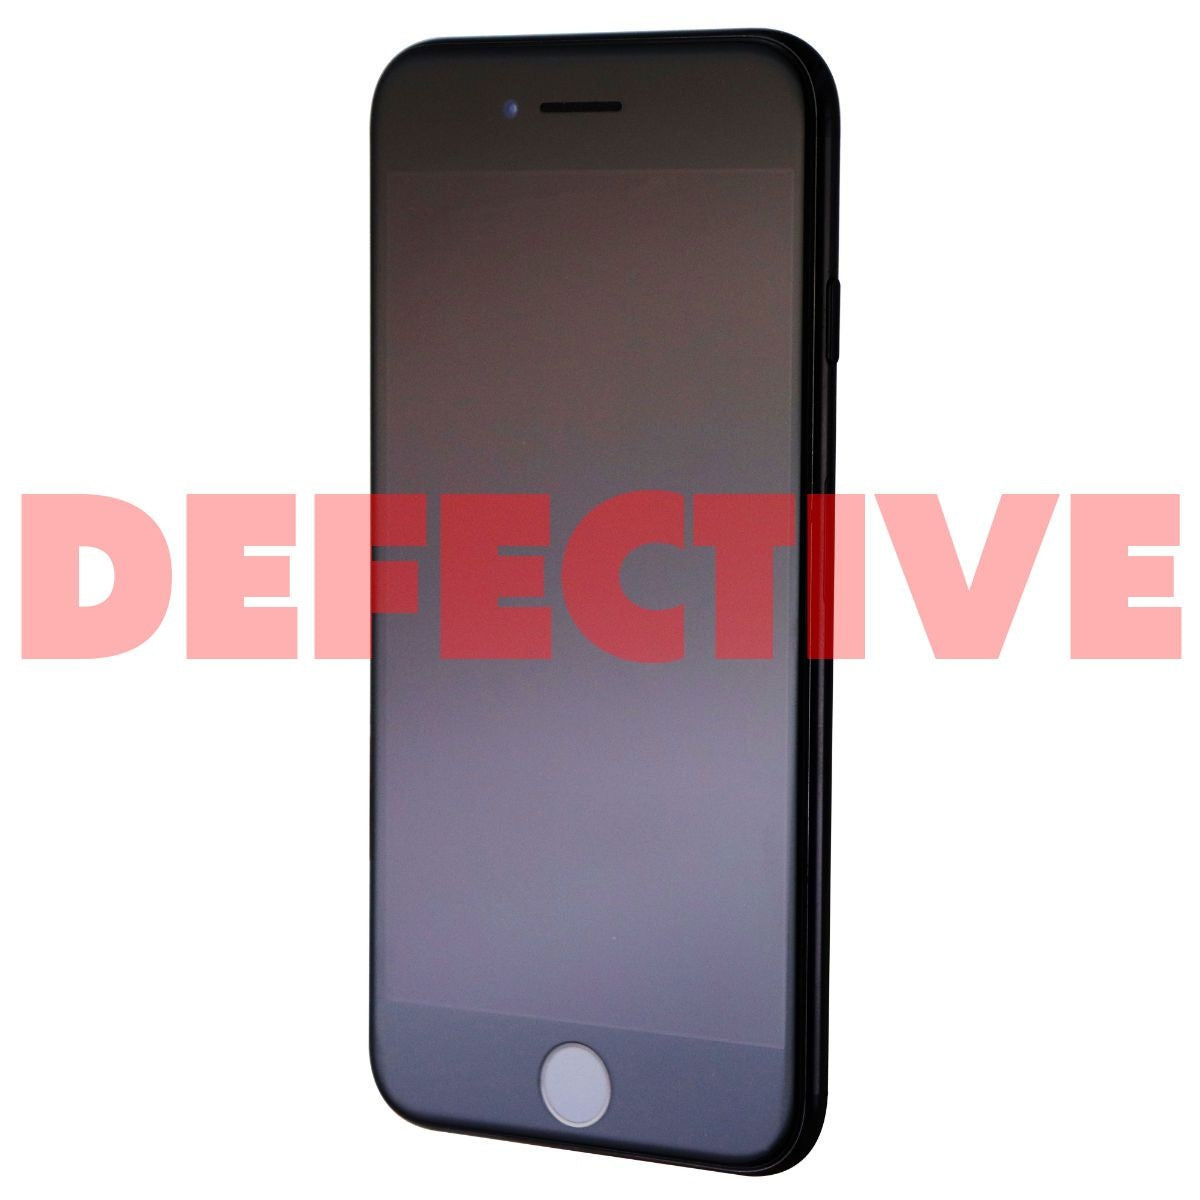 Apple iPhone 7 Smartphone A1660 (GSM Unlocked + Verizon) - 128GB / Jet Black Cell Phones & Smartphones Apple    - Simple Cell Bulk Wholesale Pricing - USA Seller